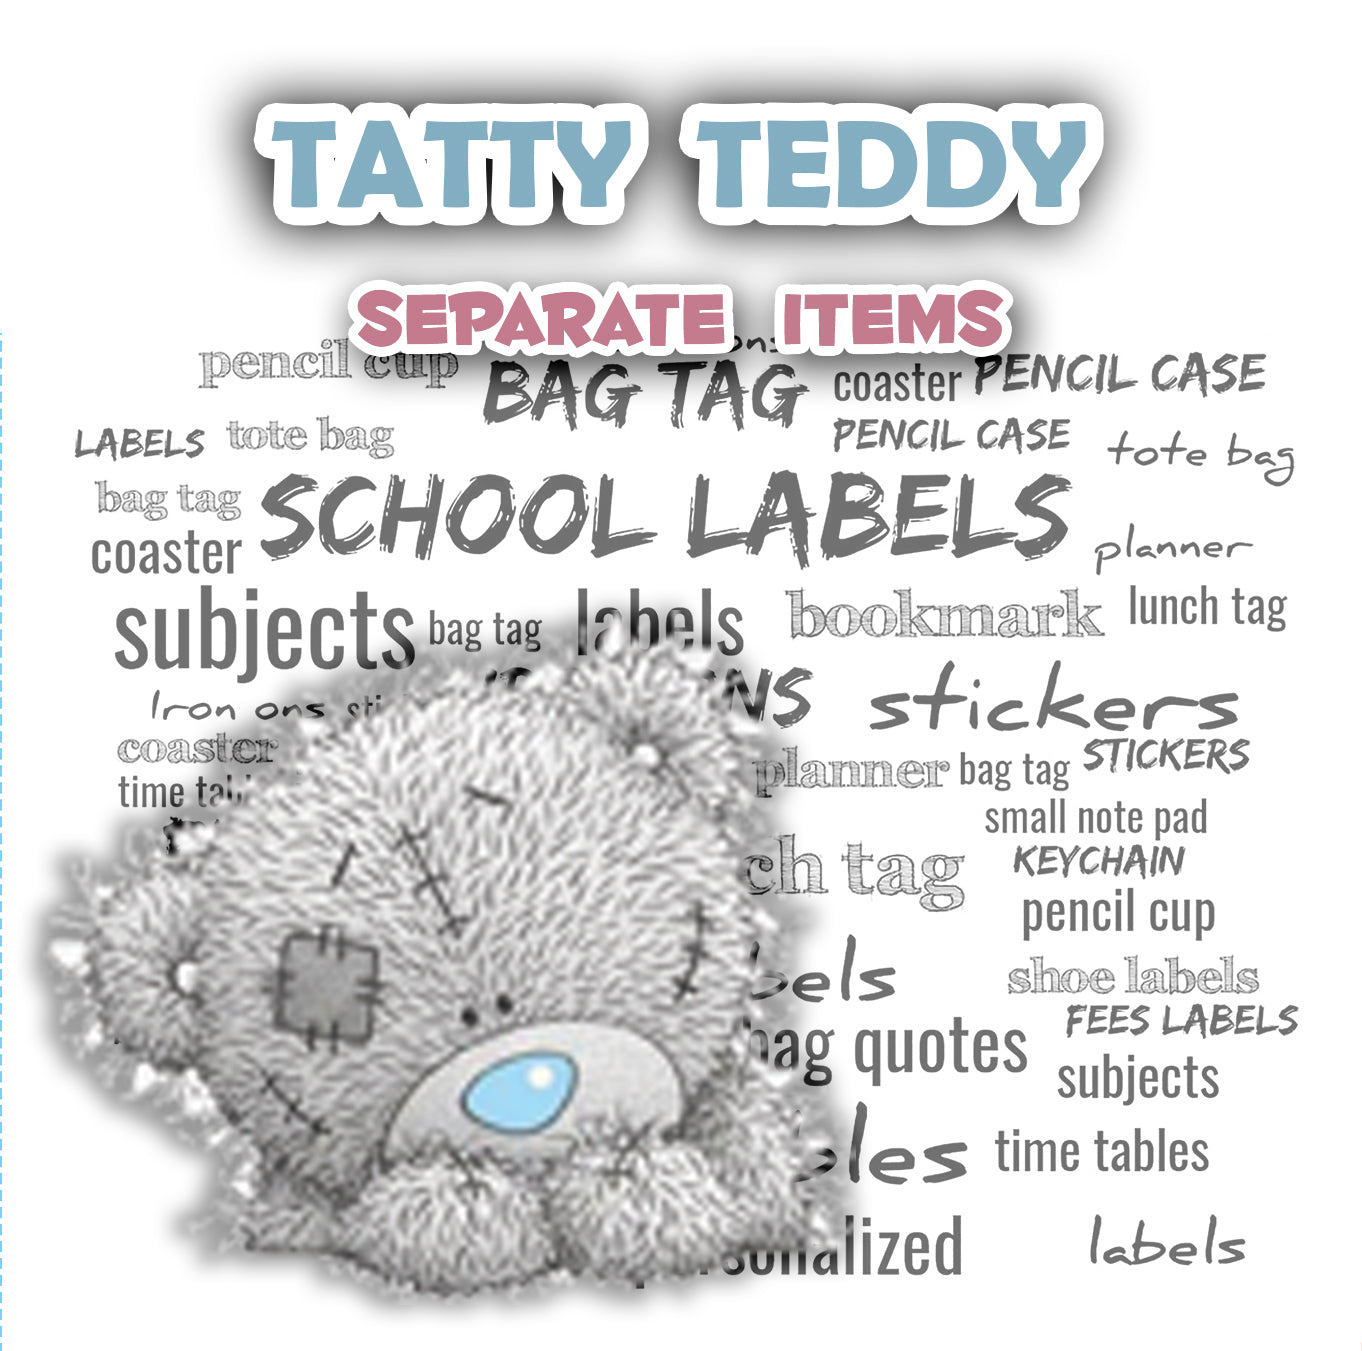 ""Tatty Teddy" Separate items